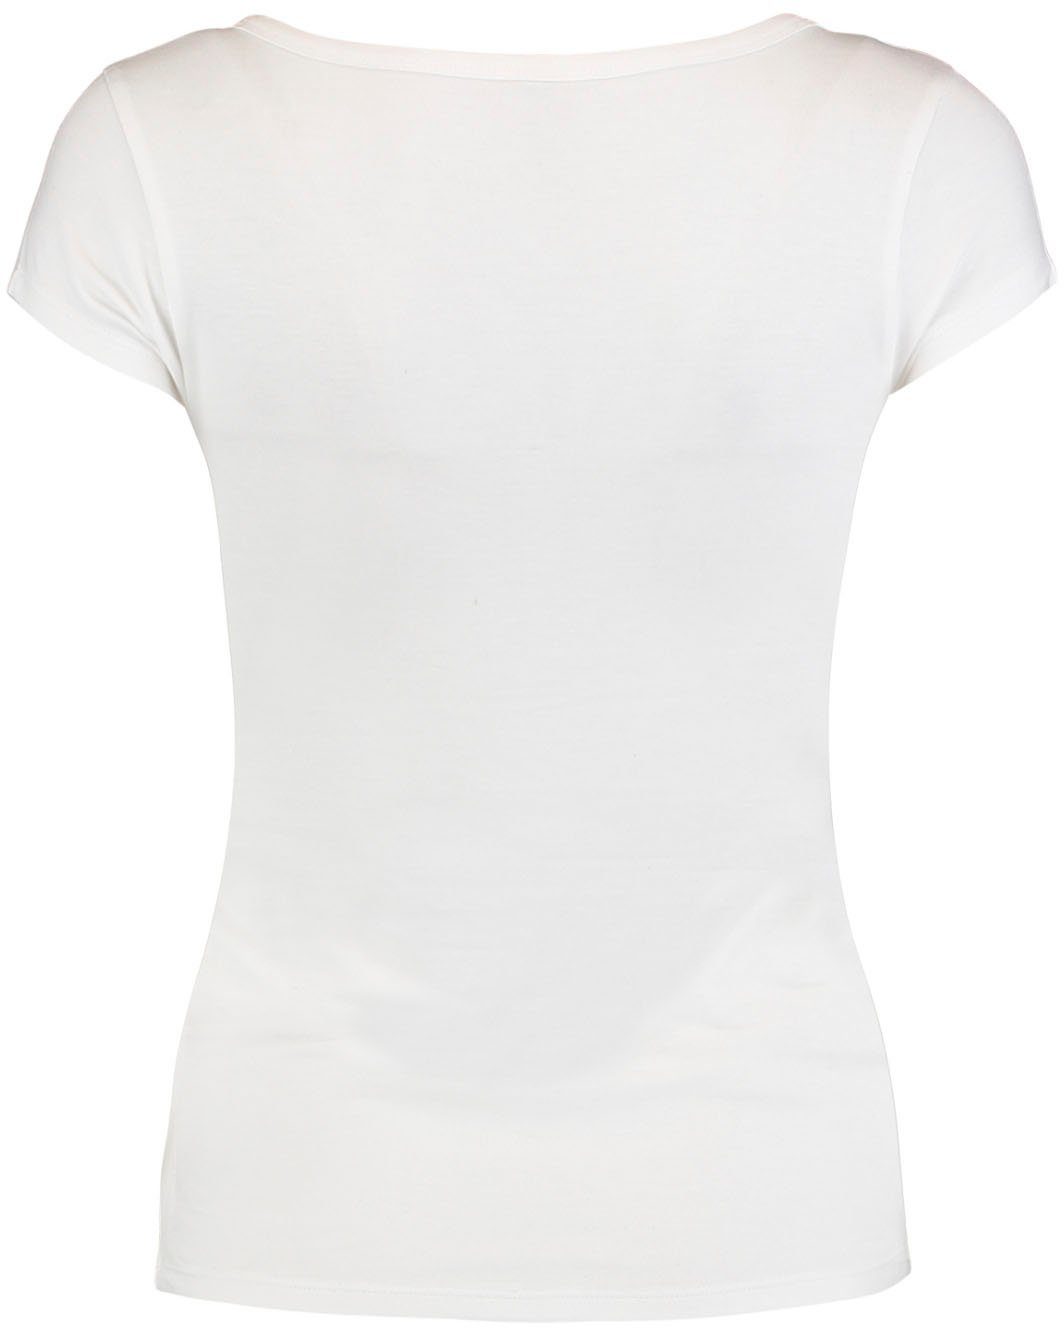 HaILY’S TP T-Shirt Henna white